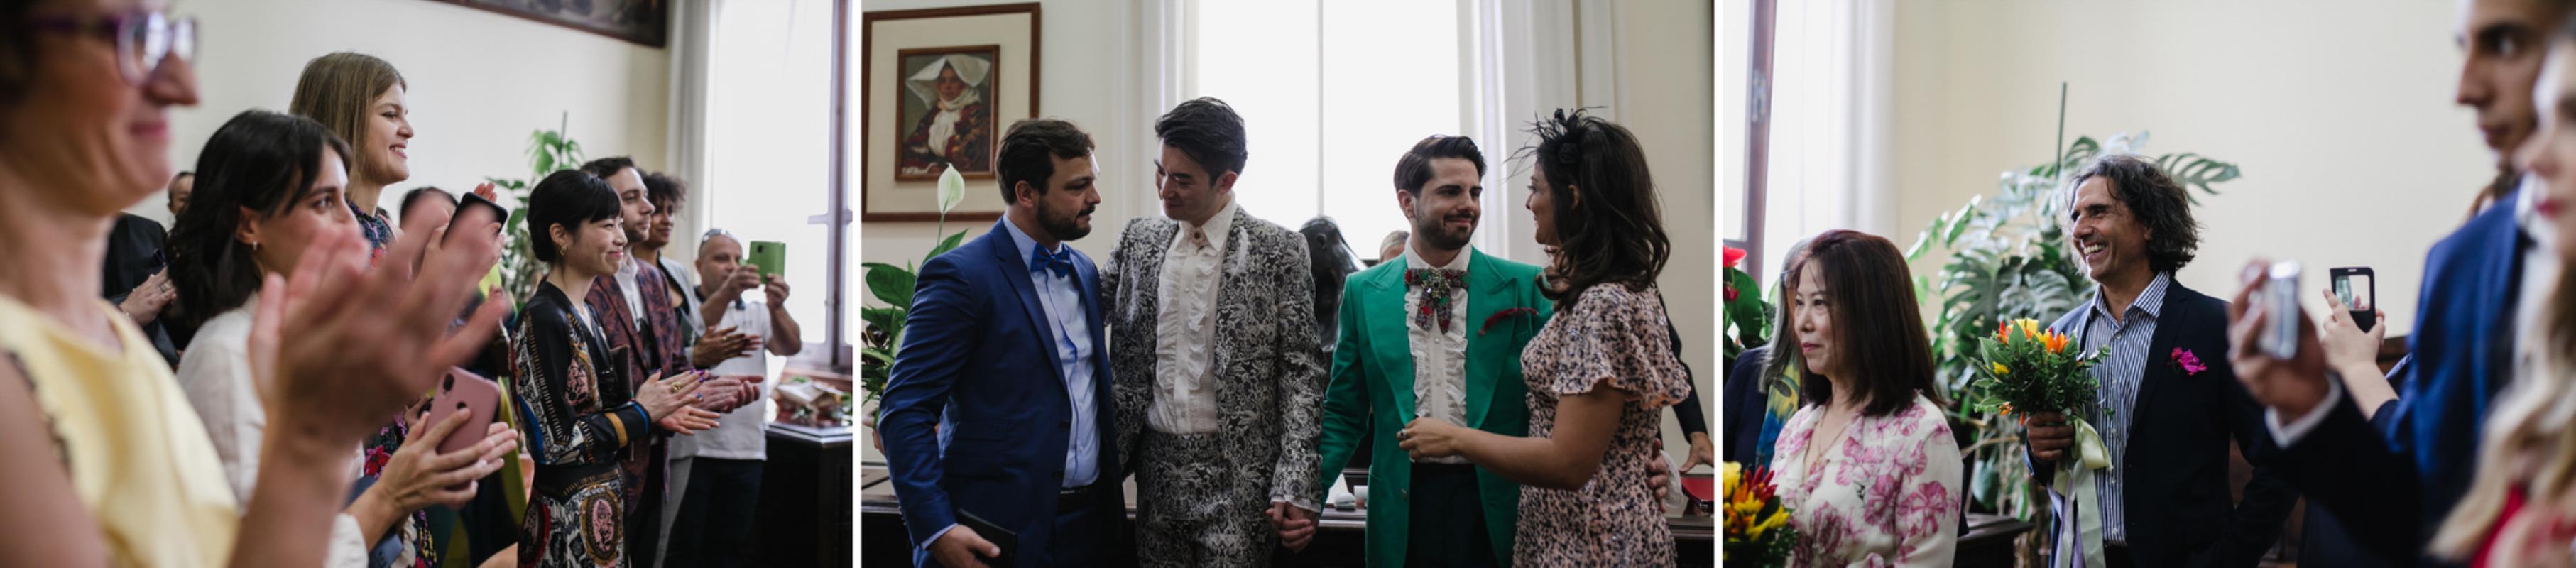 matrimonio gay | Laura Stramacchia | Wedding Photography